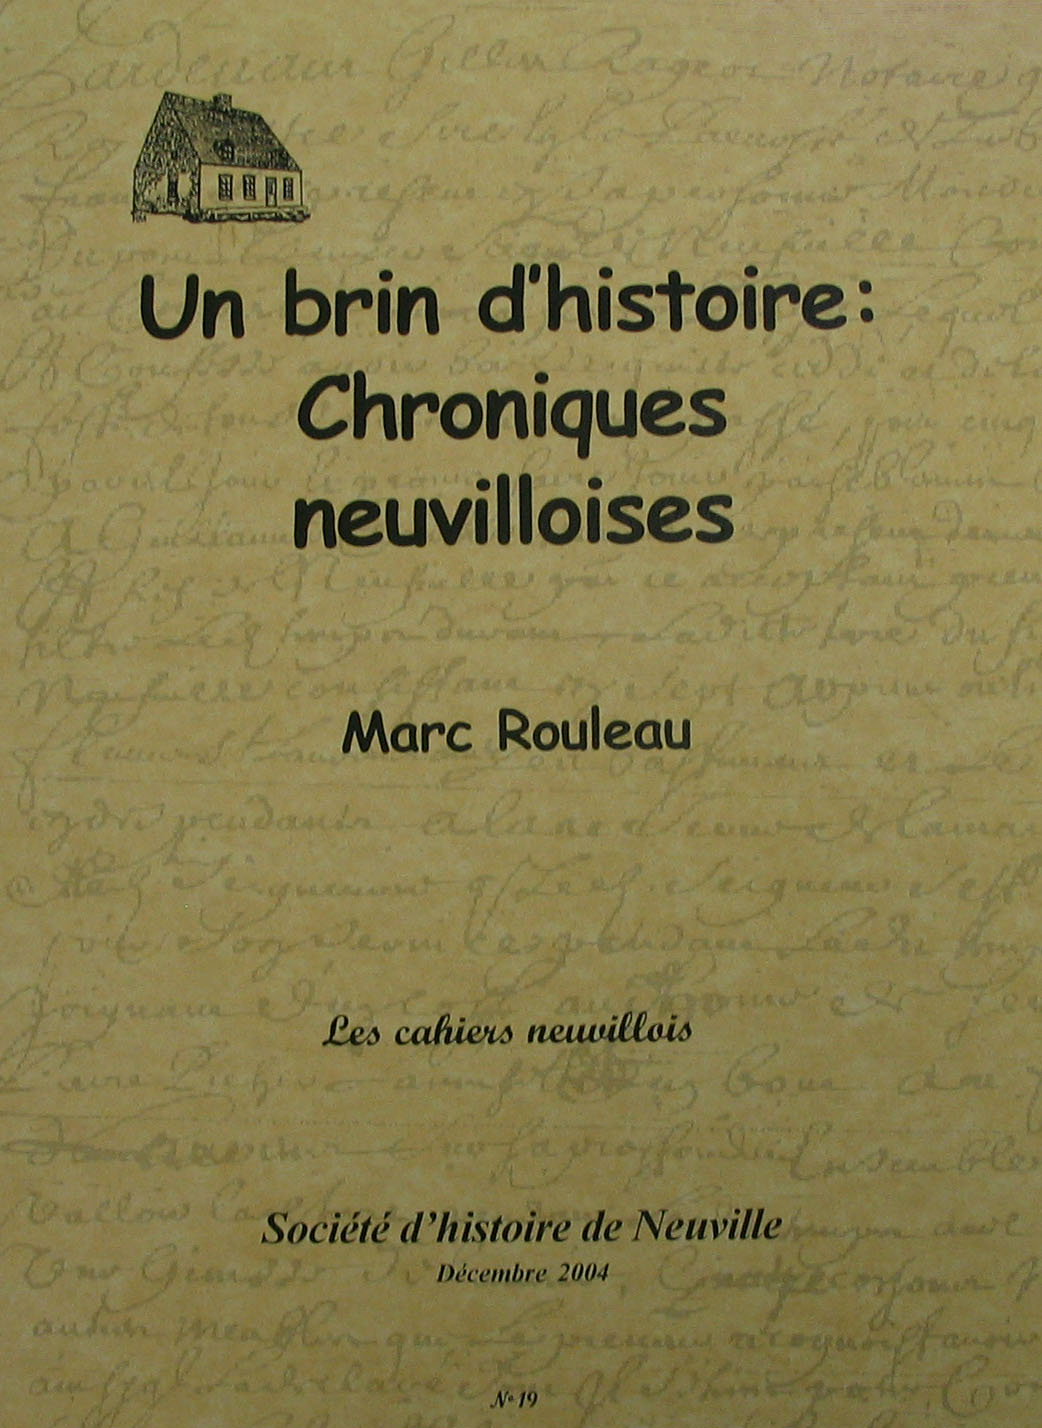 publication no 19